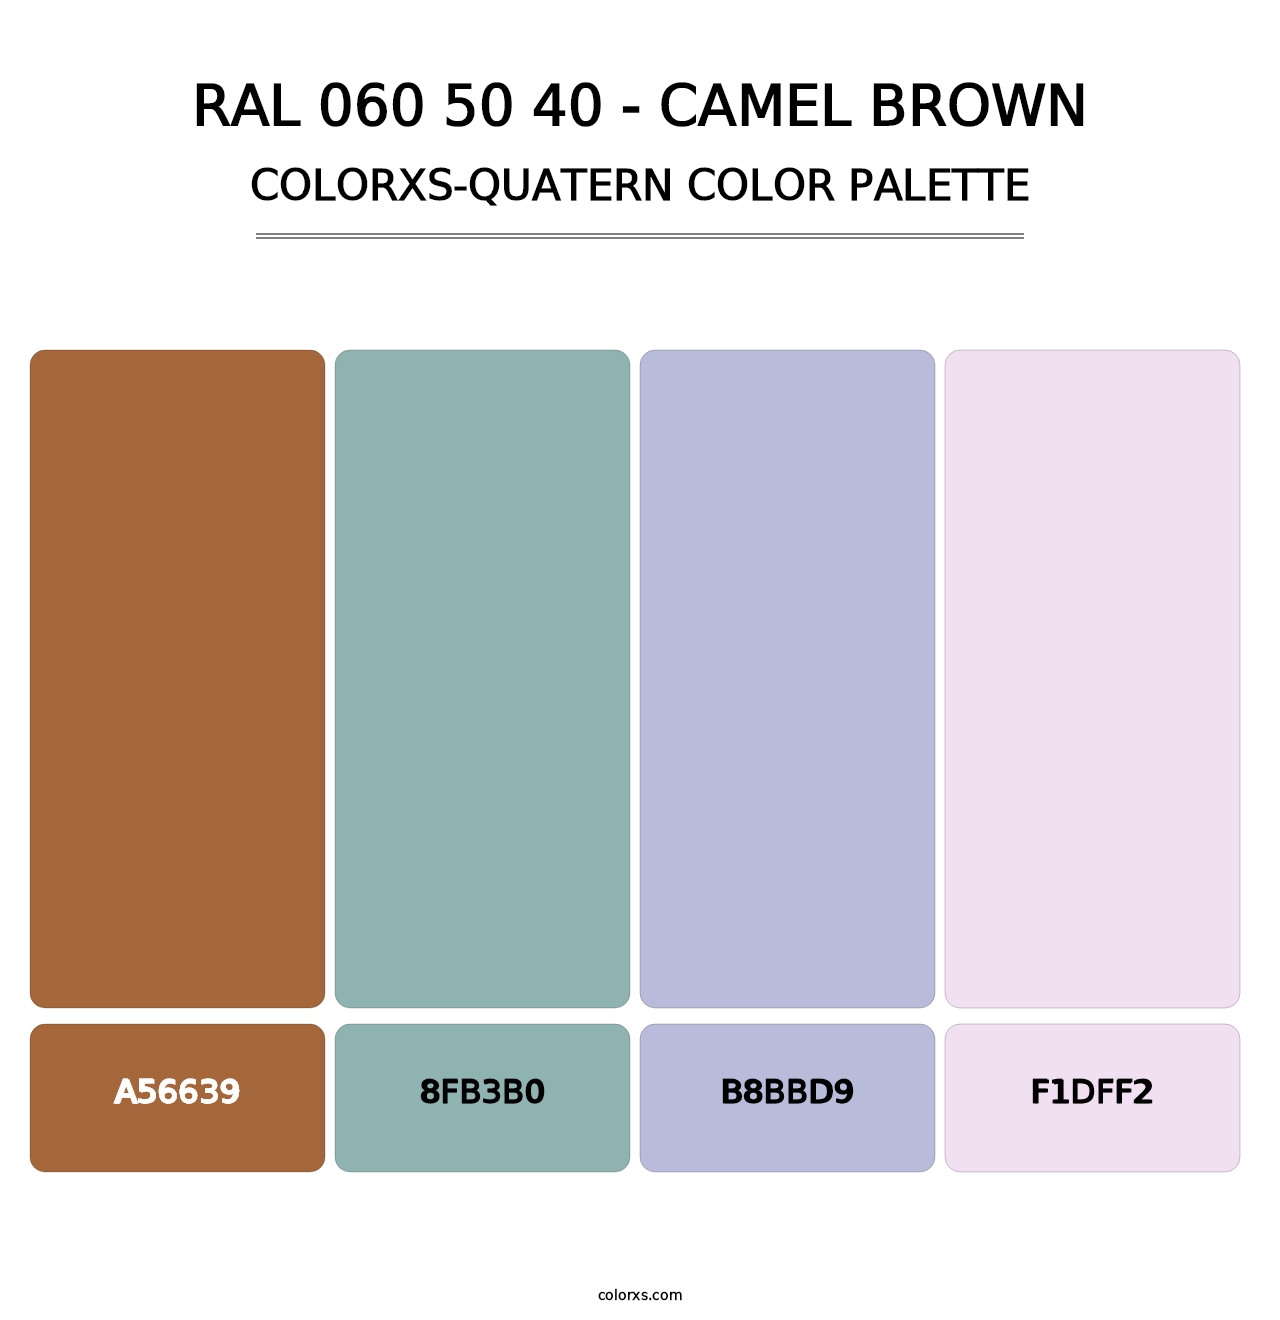 RAL 060 50 40 - Camel Brown - Colorxs Quatern Palette